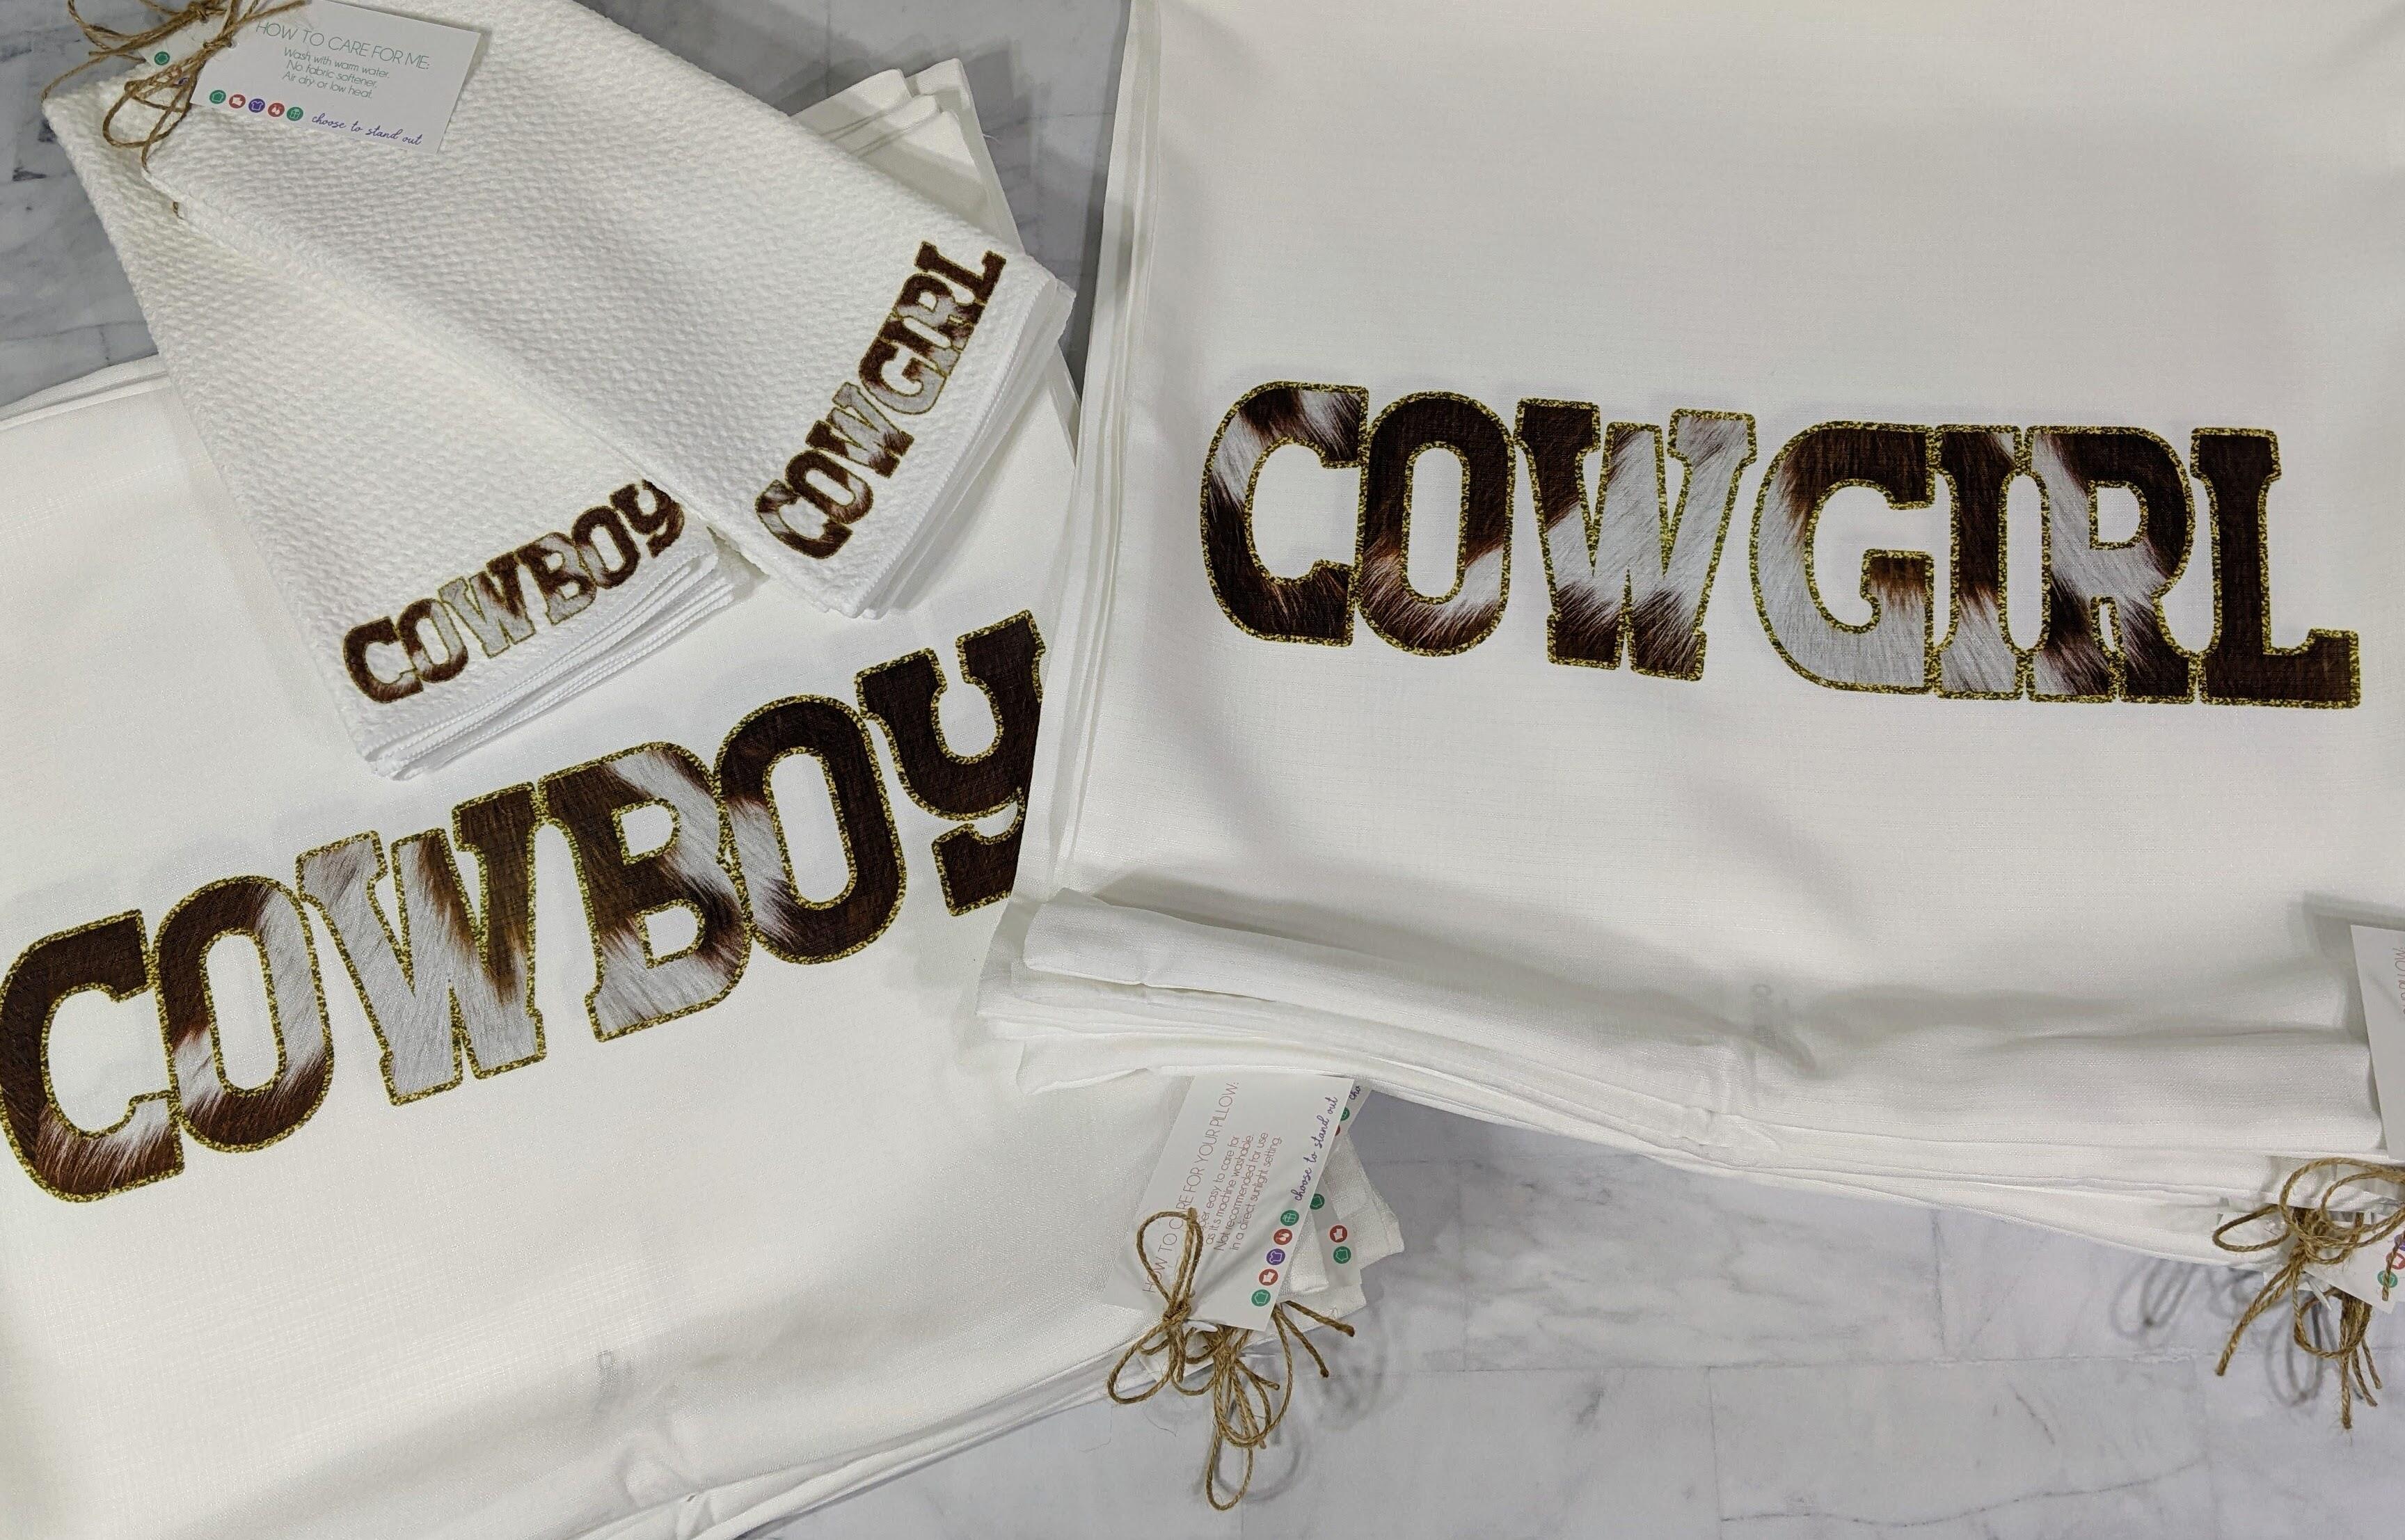 Cowhide cowboy pillow